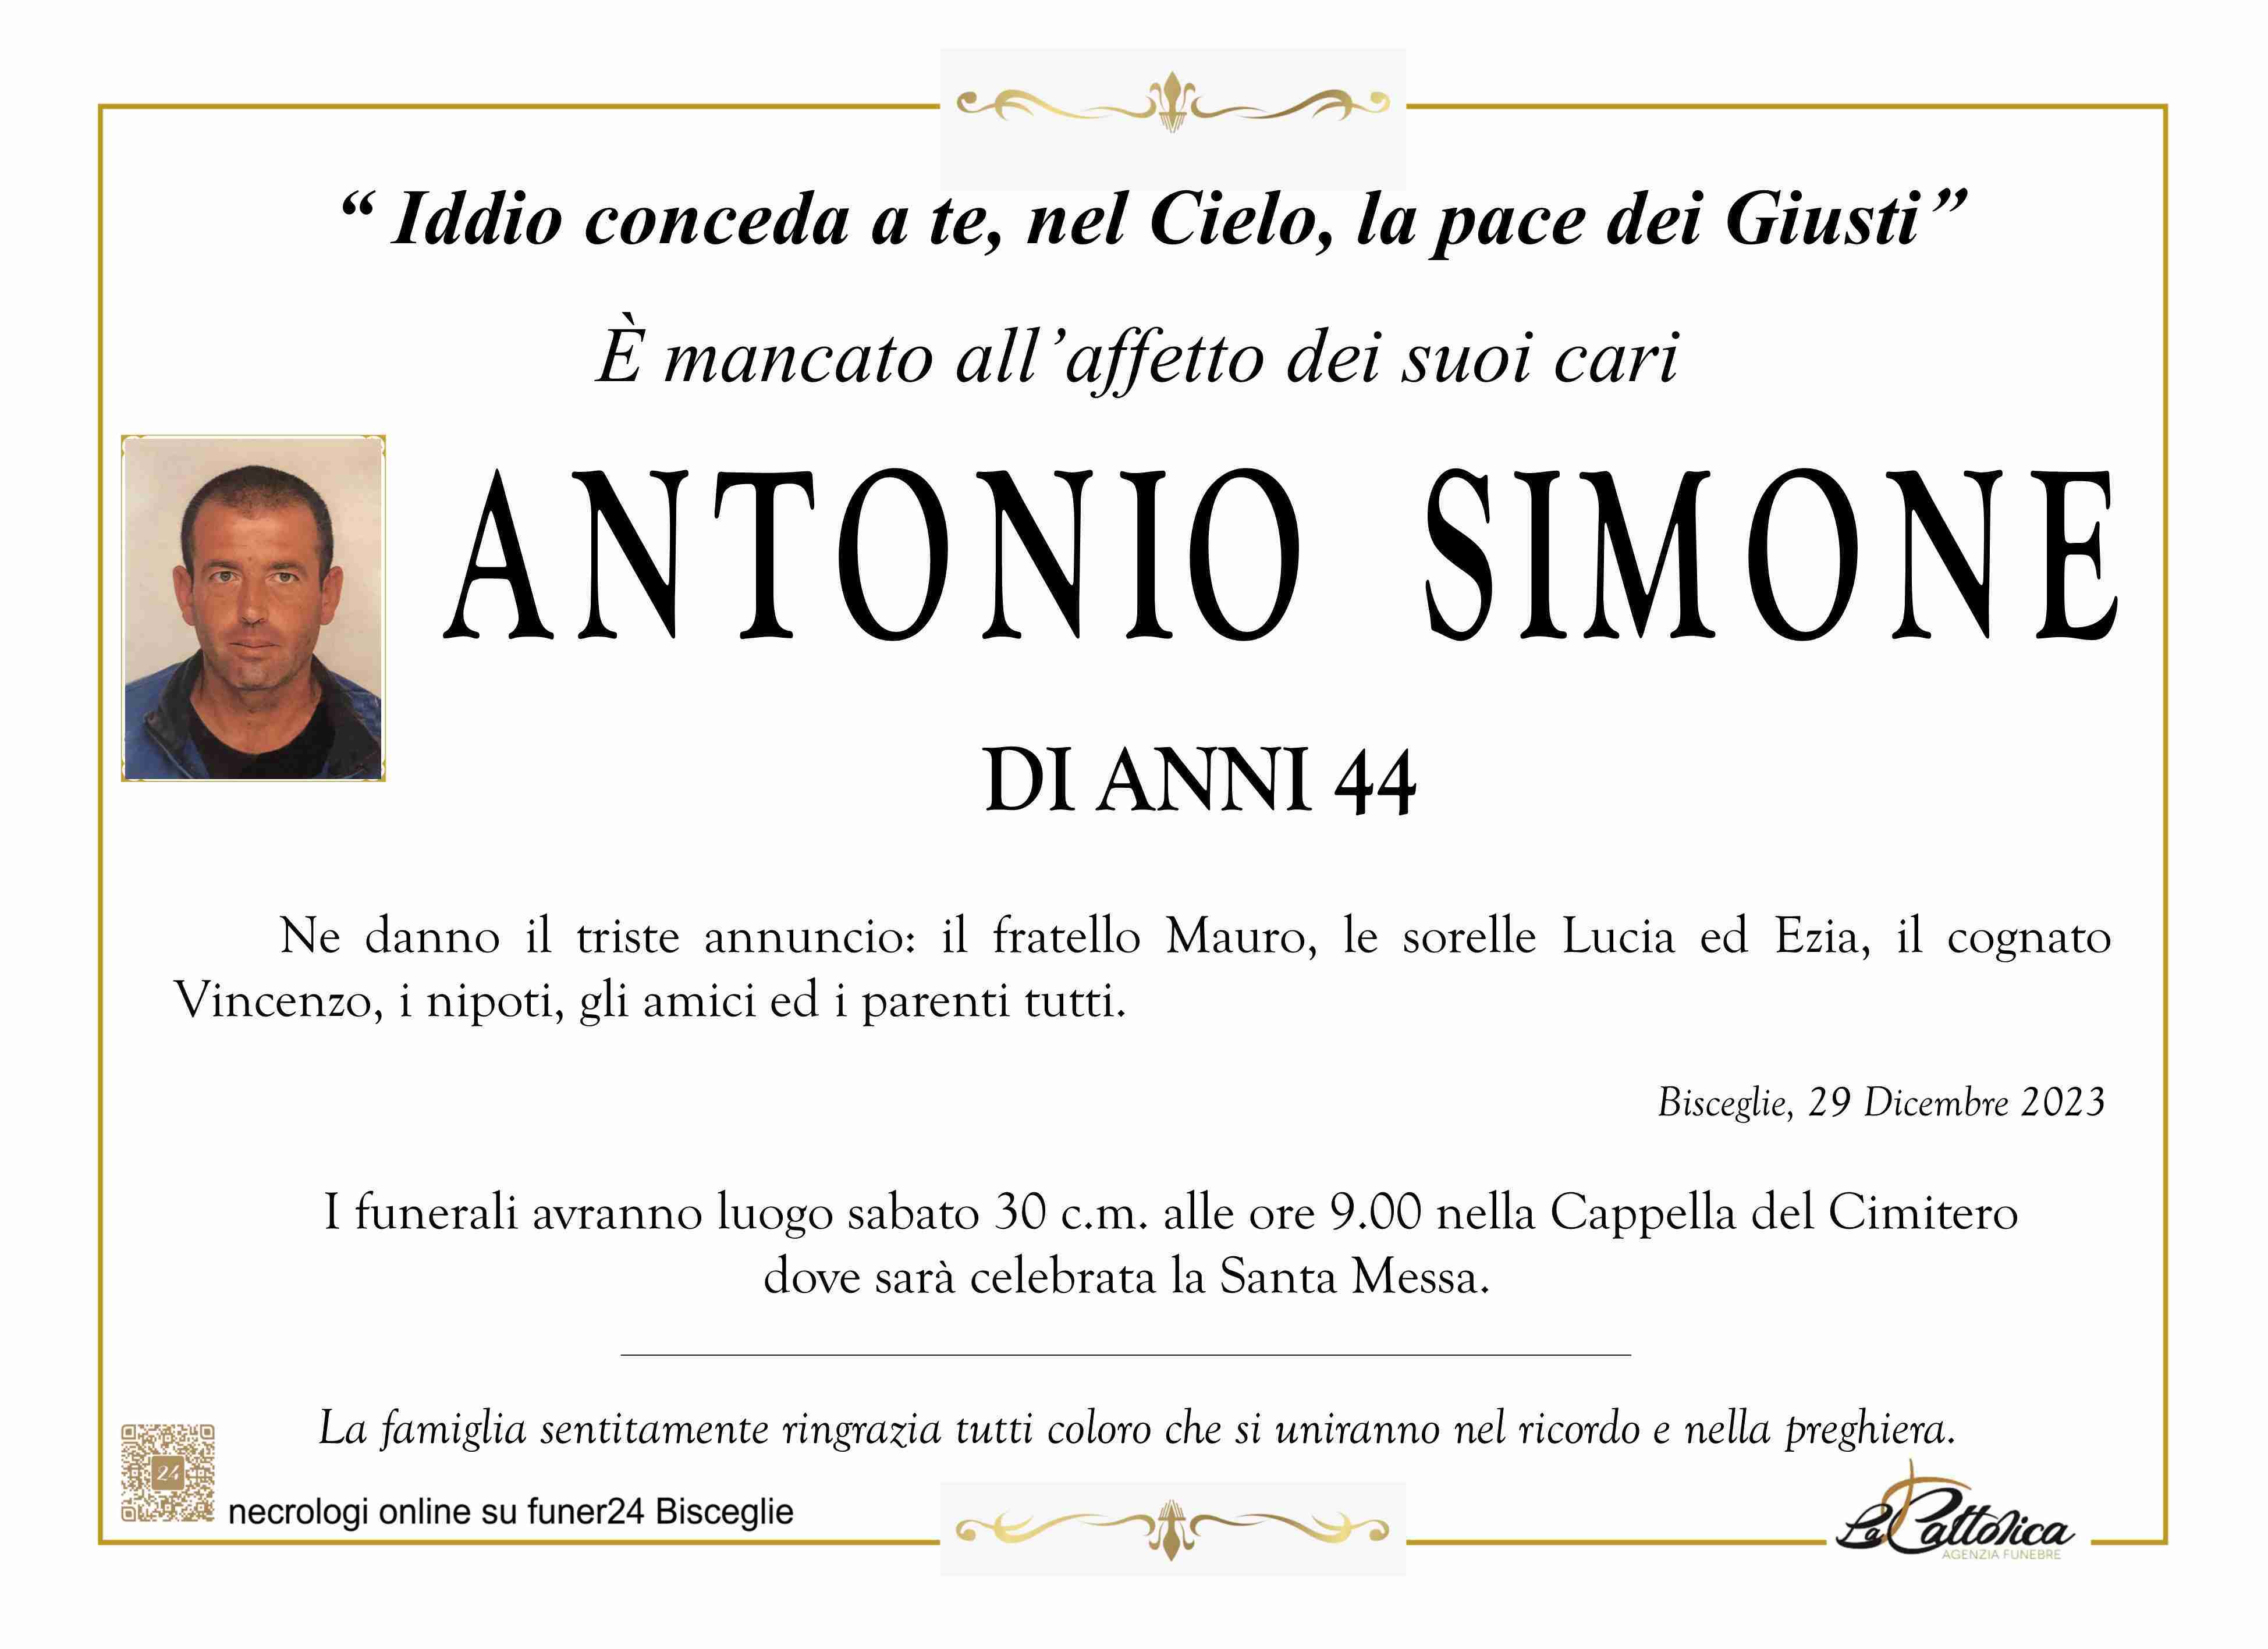 Antonio Simone